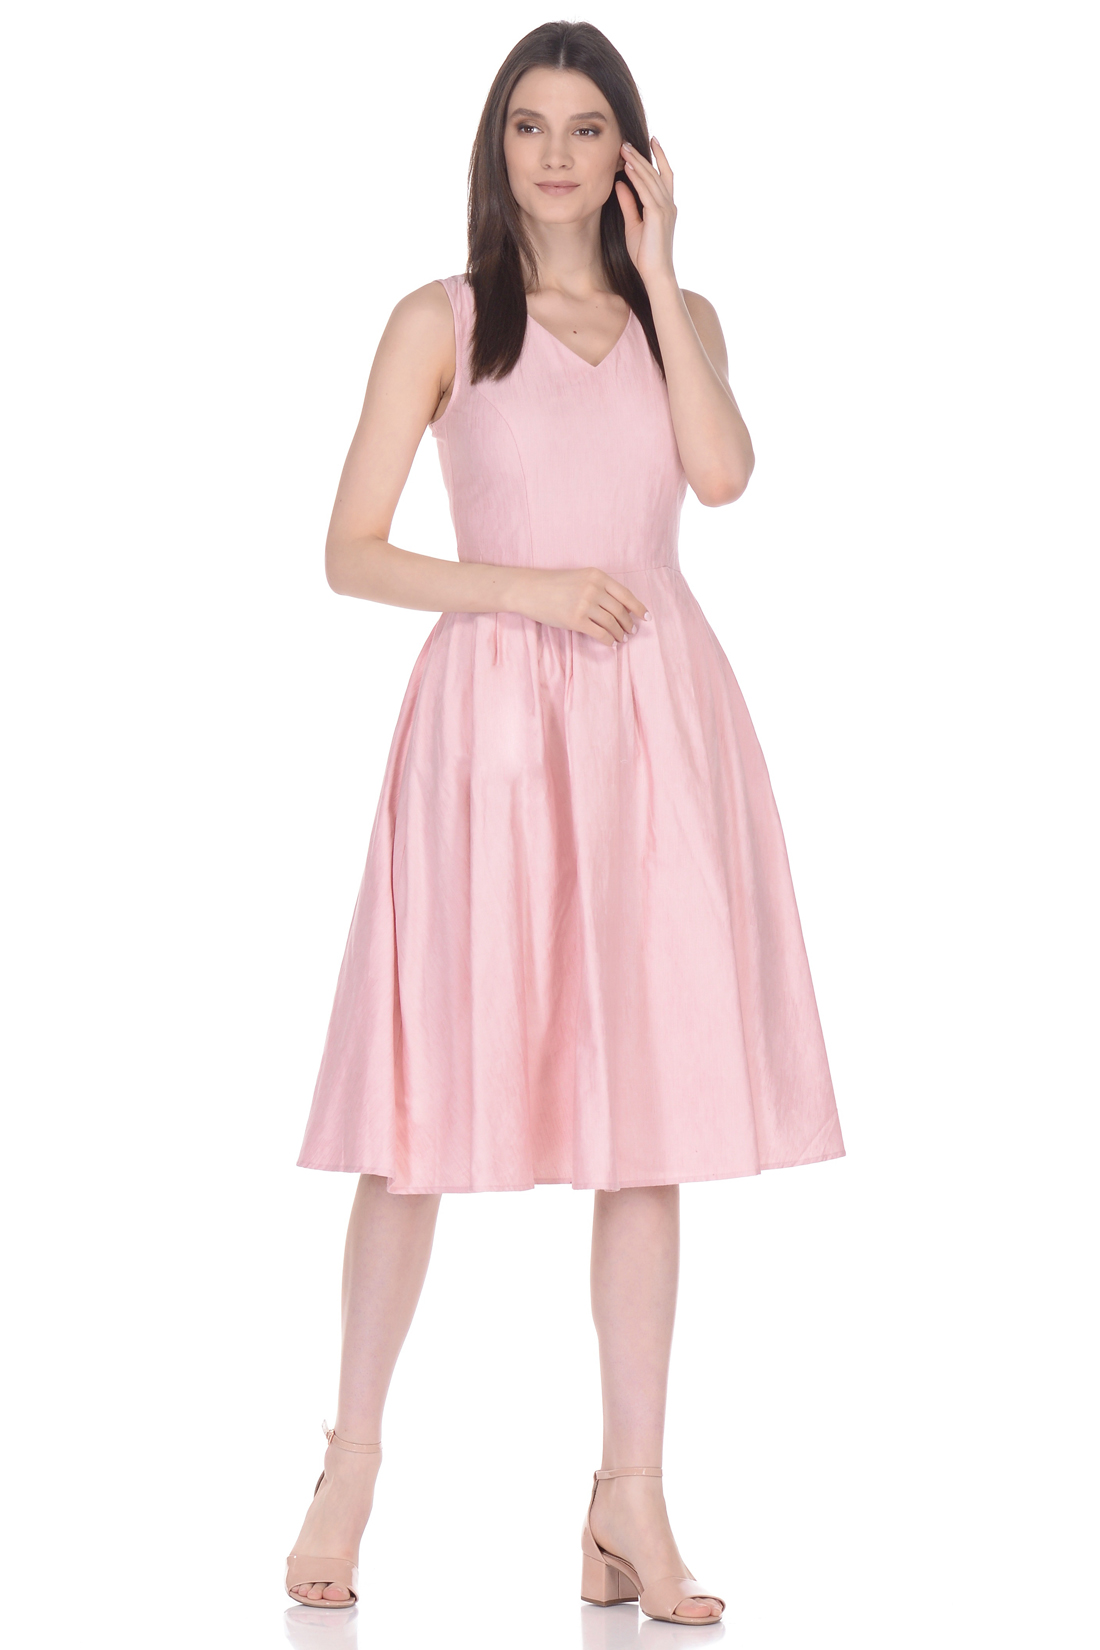 Платье силуэта new look (арт. baon B458043), размер S, цвет розовый Платье силуэта new look (арт. baon B458043) - фото 1